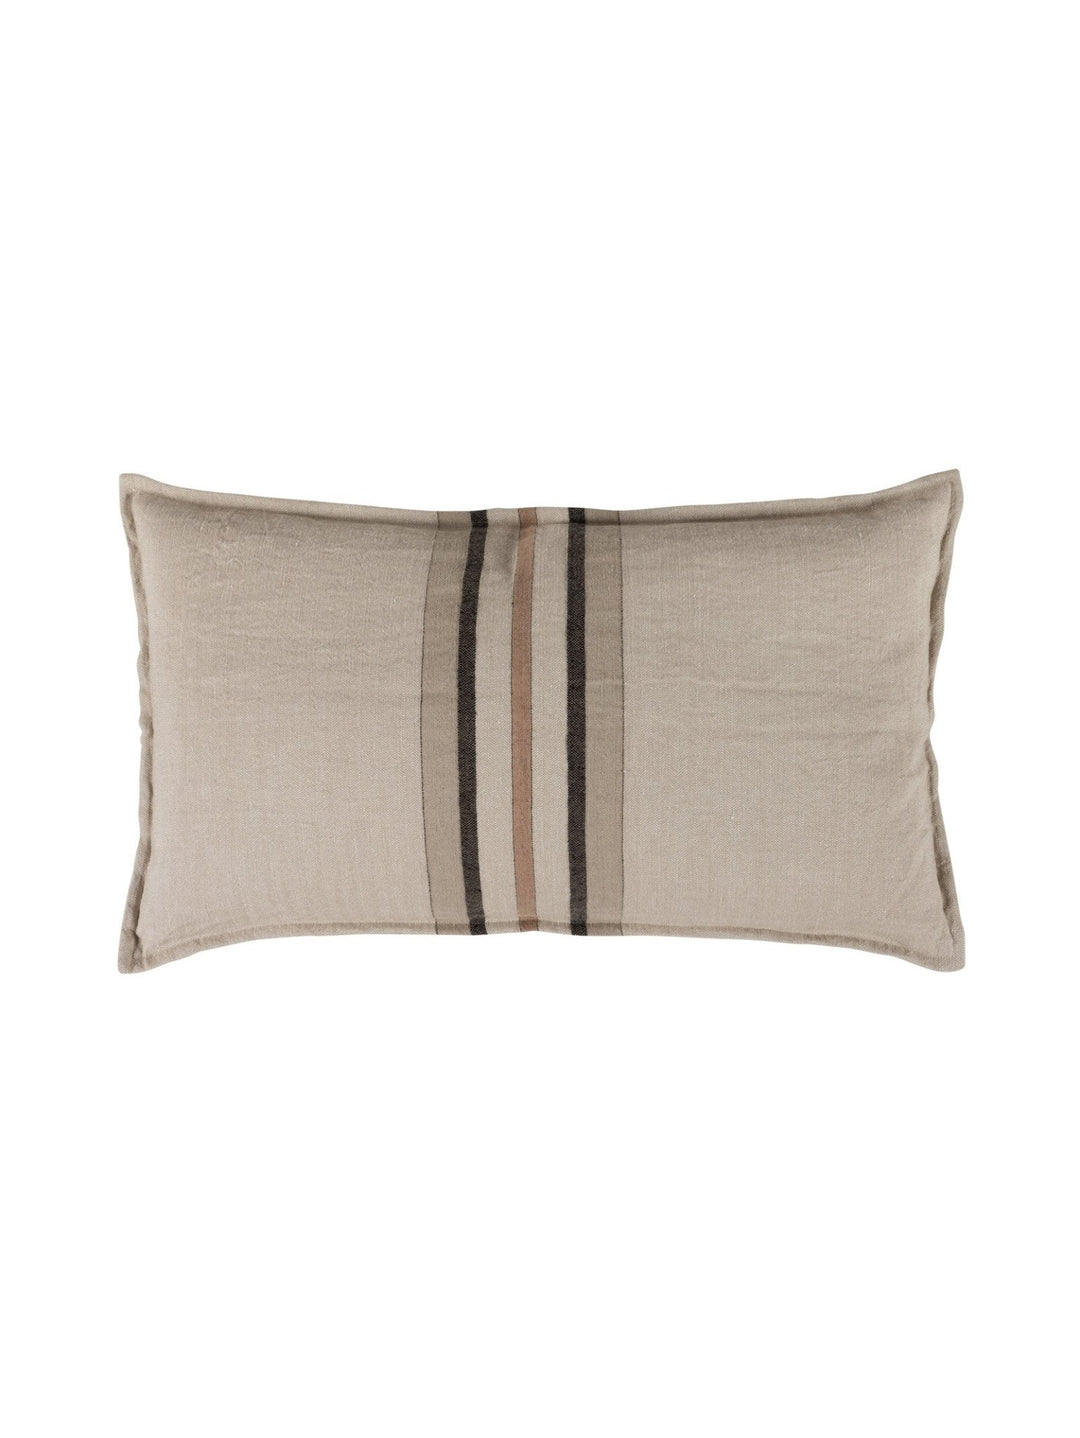 Sicily Pillowcase Set of 2 in Kohl - pillowcase - Hertex Haus - bed & bath